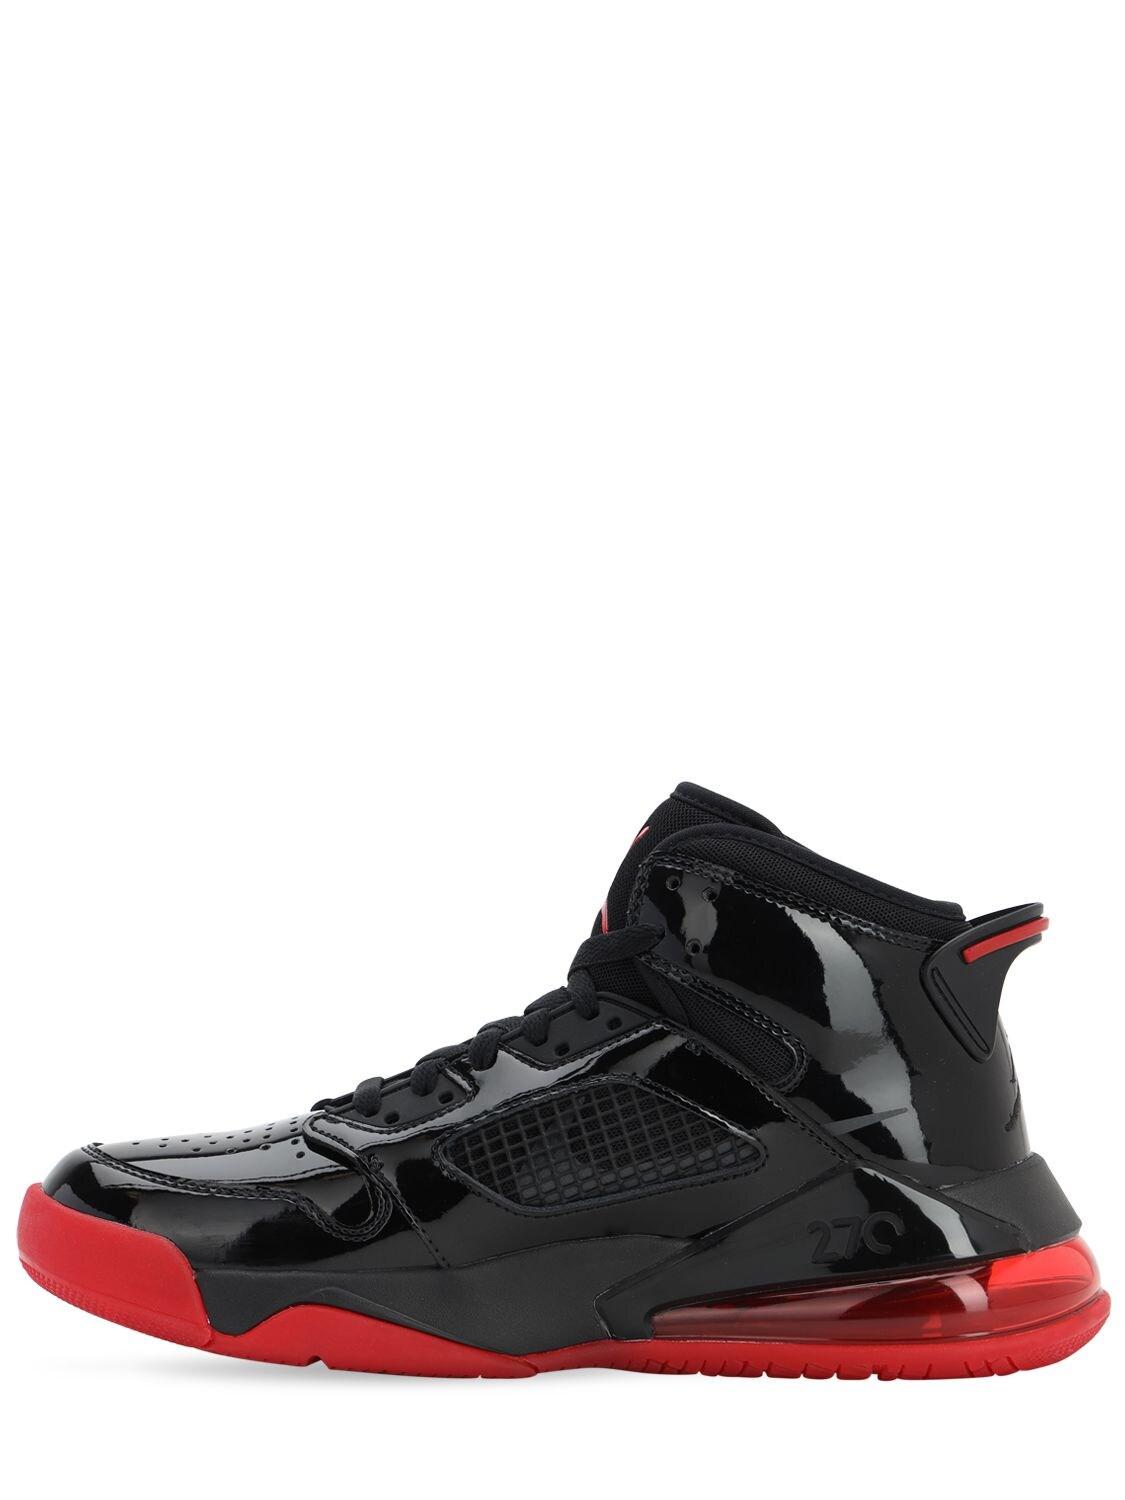 Nike Jordan Mars 270 Shoe in Black/Red (Black) for Men | Lyst